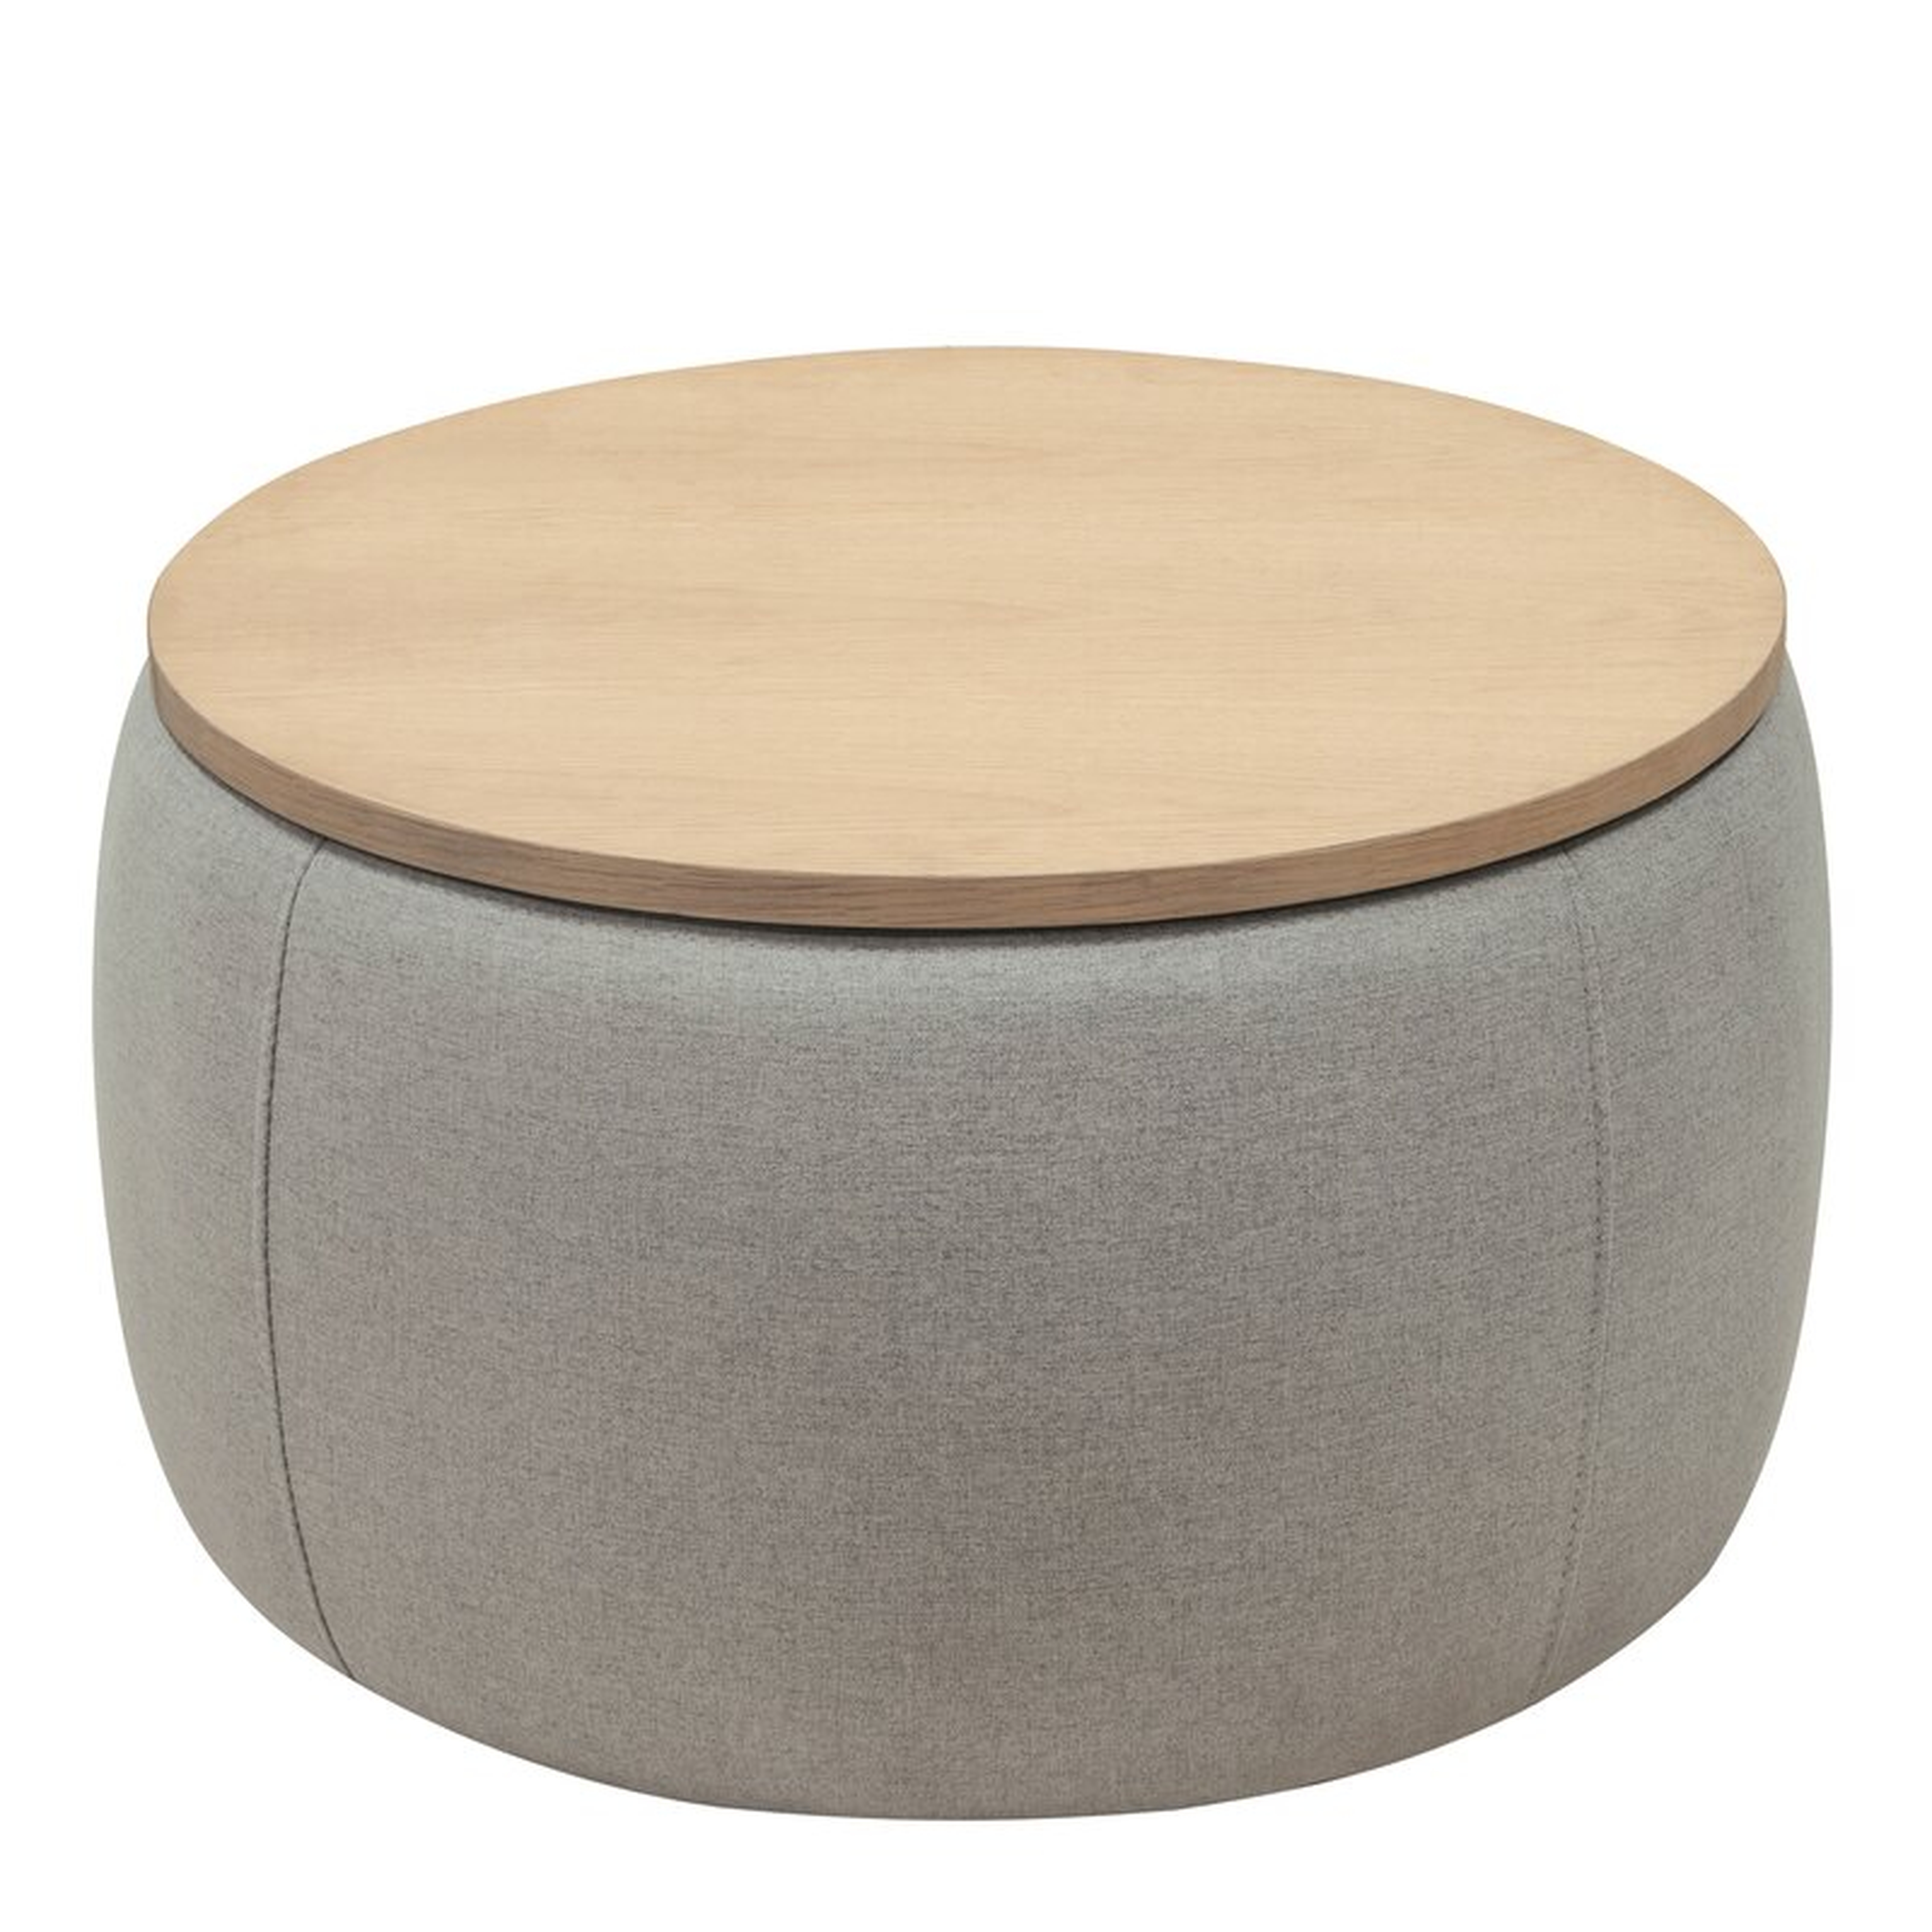 Coffee Table With Storage, Light Gray - Wayfair